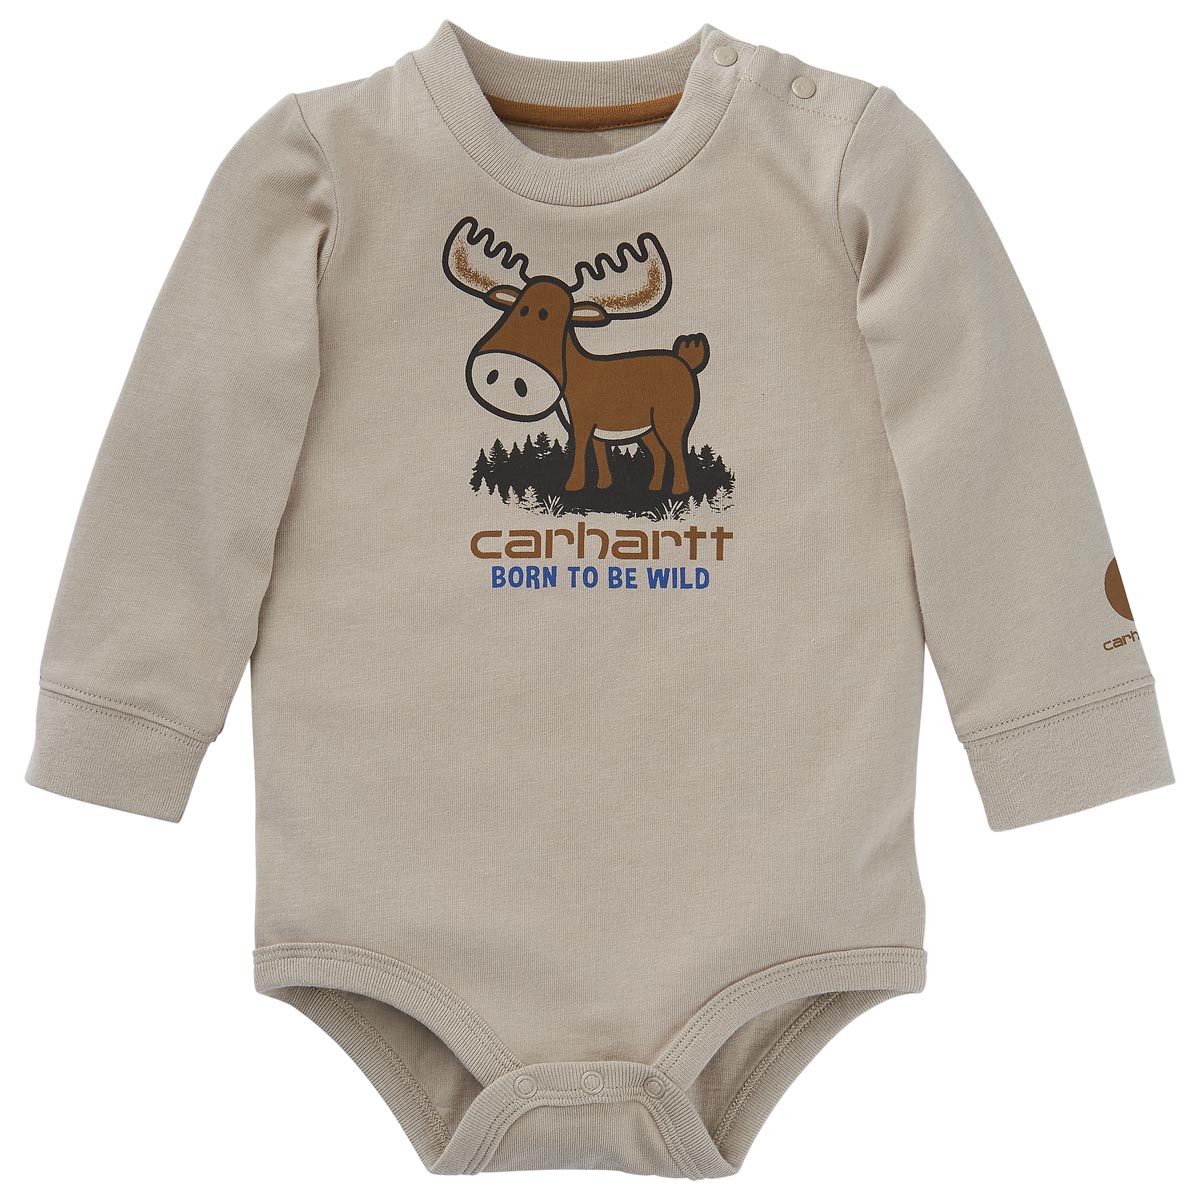 Carhartt Infant Boys Born Wild Bodyshirt